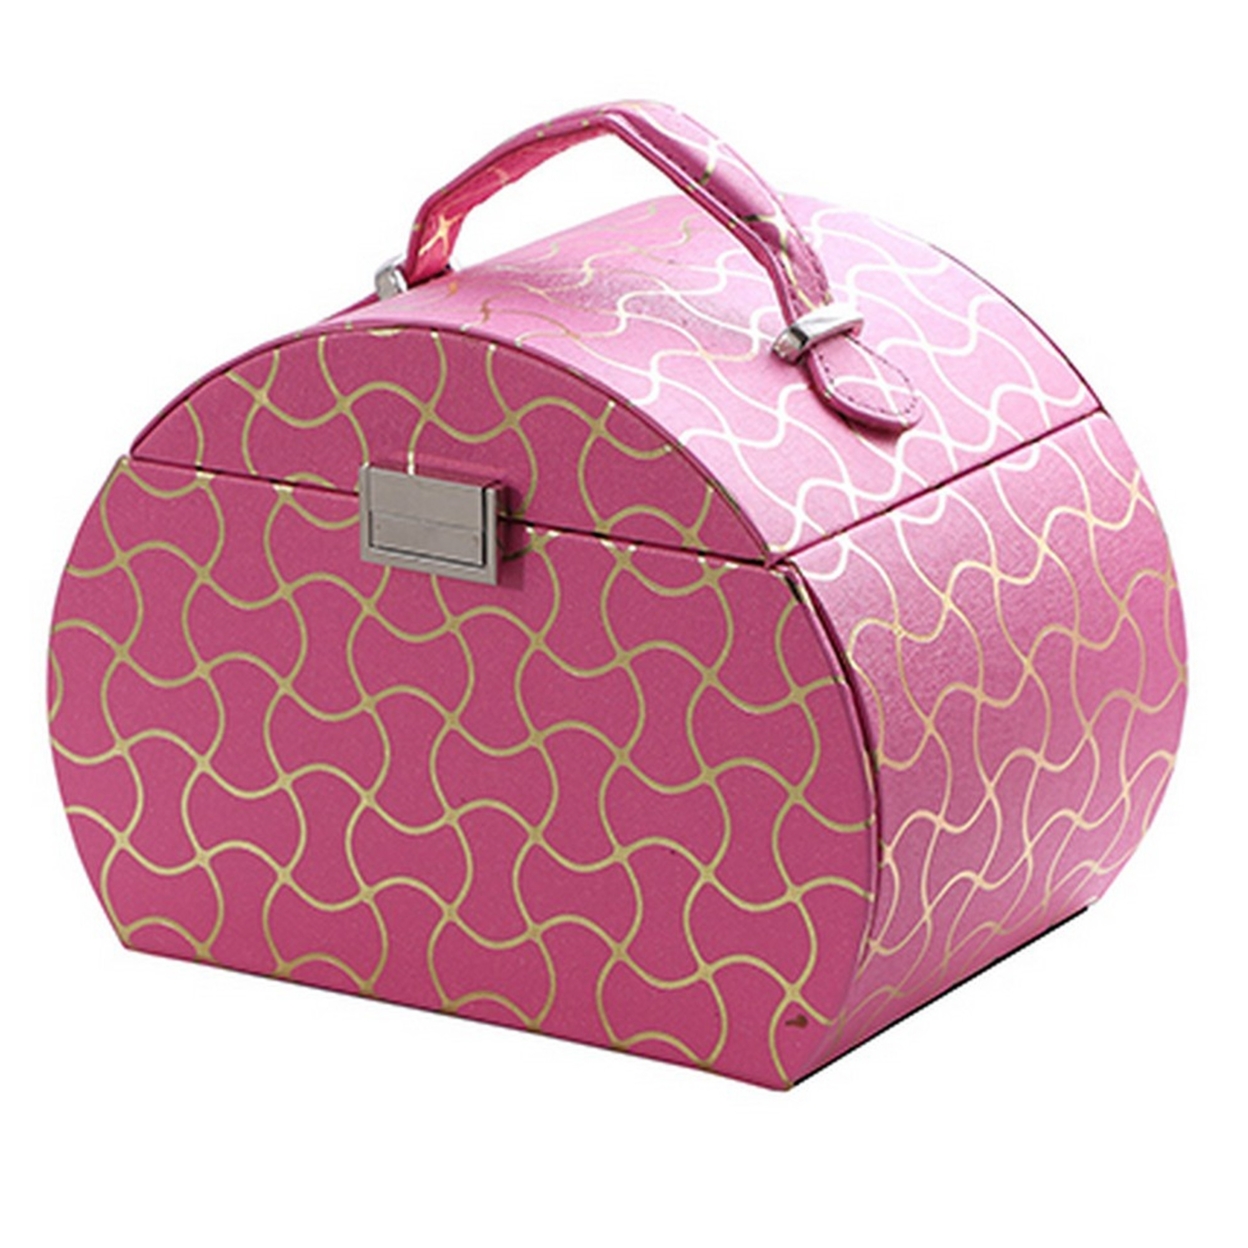 Travel Jewelry Case With 2 Drawer Storage And Wavy Textured Pattern, Pink- Saltoro Sherpi